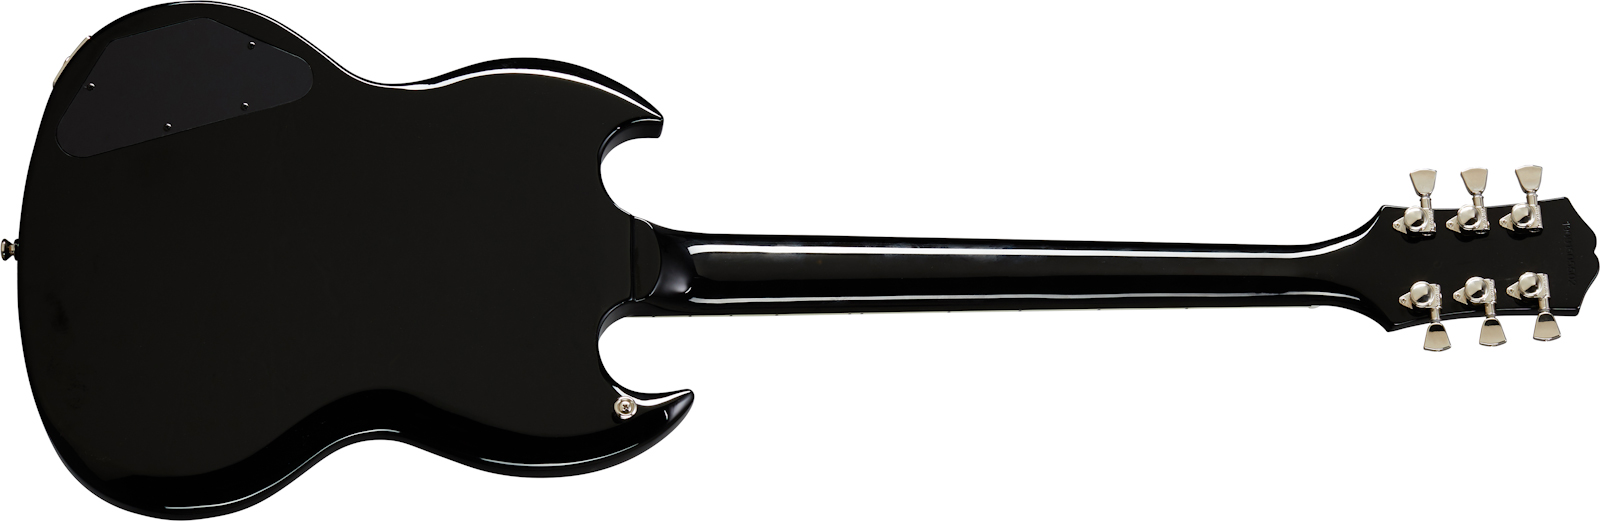 Epiphone Sg Modern Figured 2h Ht Eb - Black Transparent - Guitarra eléctrica de doble corte - Variation 1